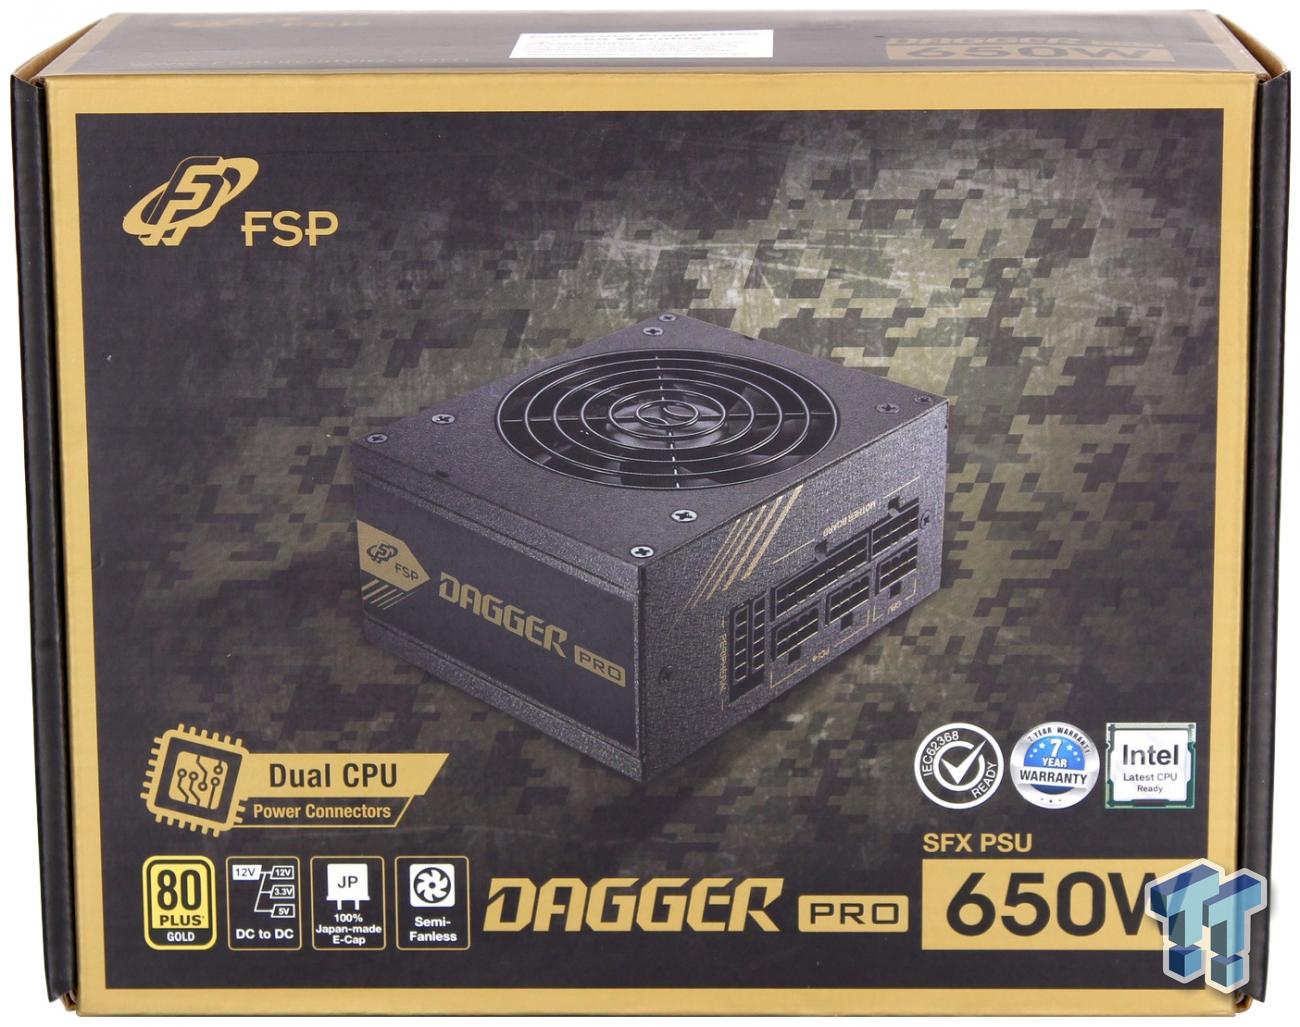 FSP Dagger Pro 650W Gold SFX Power Supply Review